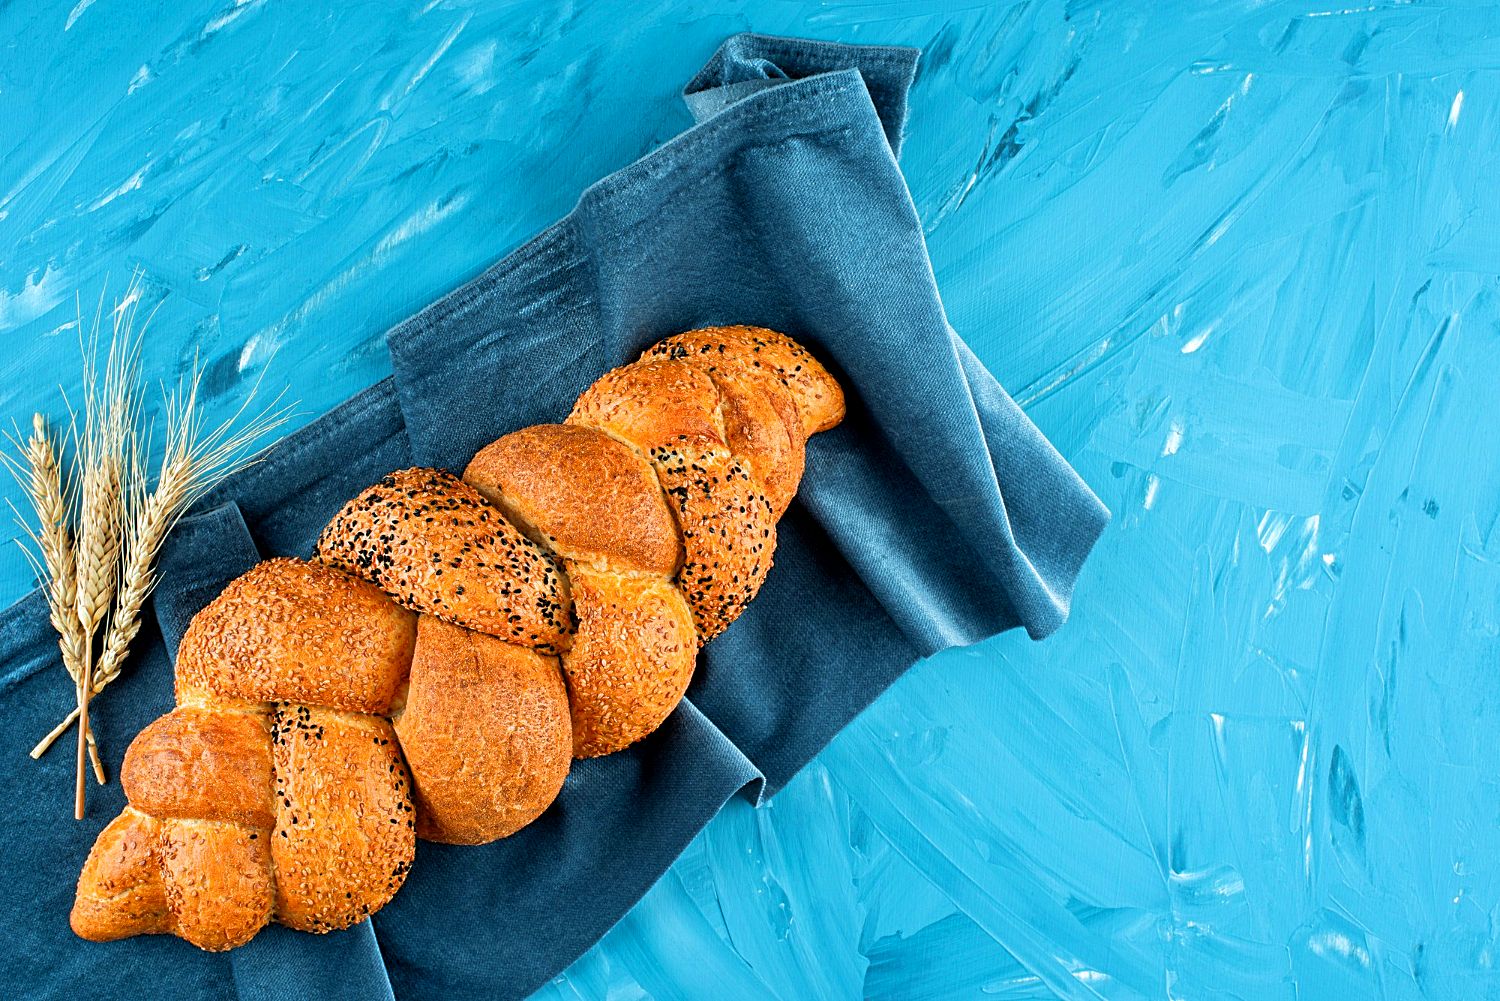 Freshly baked challah bread